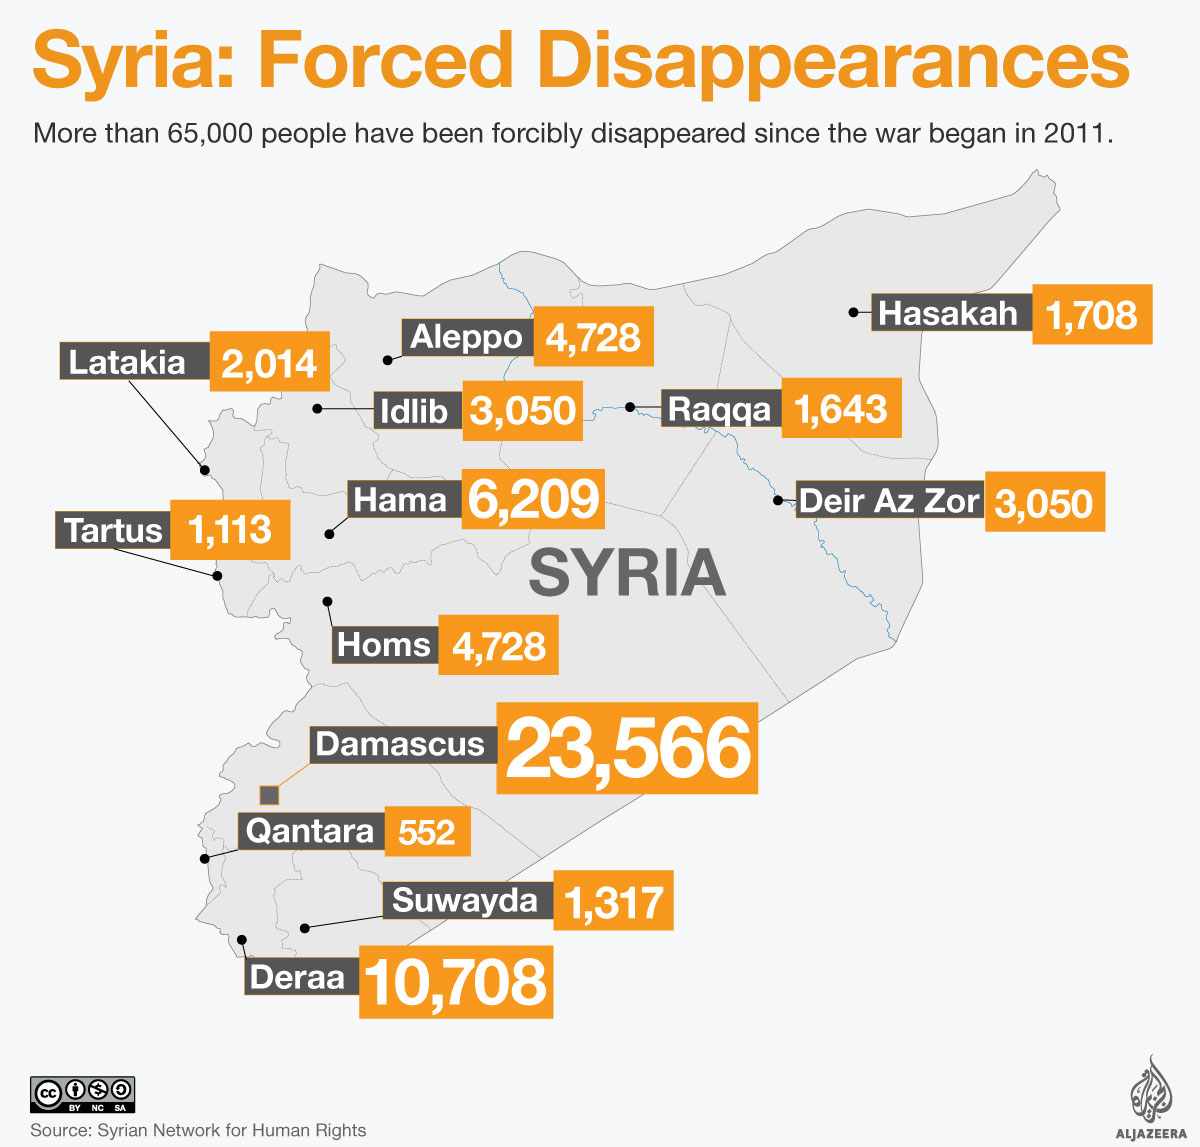 Syria: Forced Disappearances [Al Jazeera]